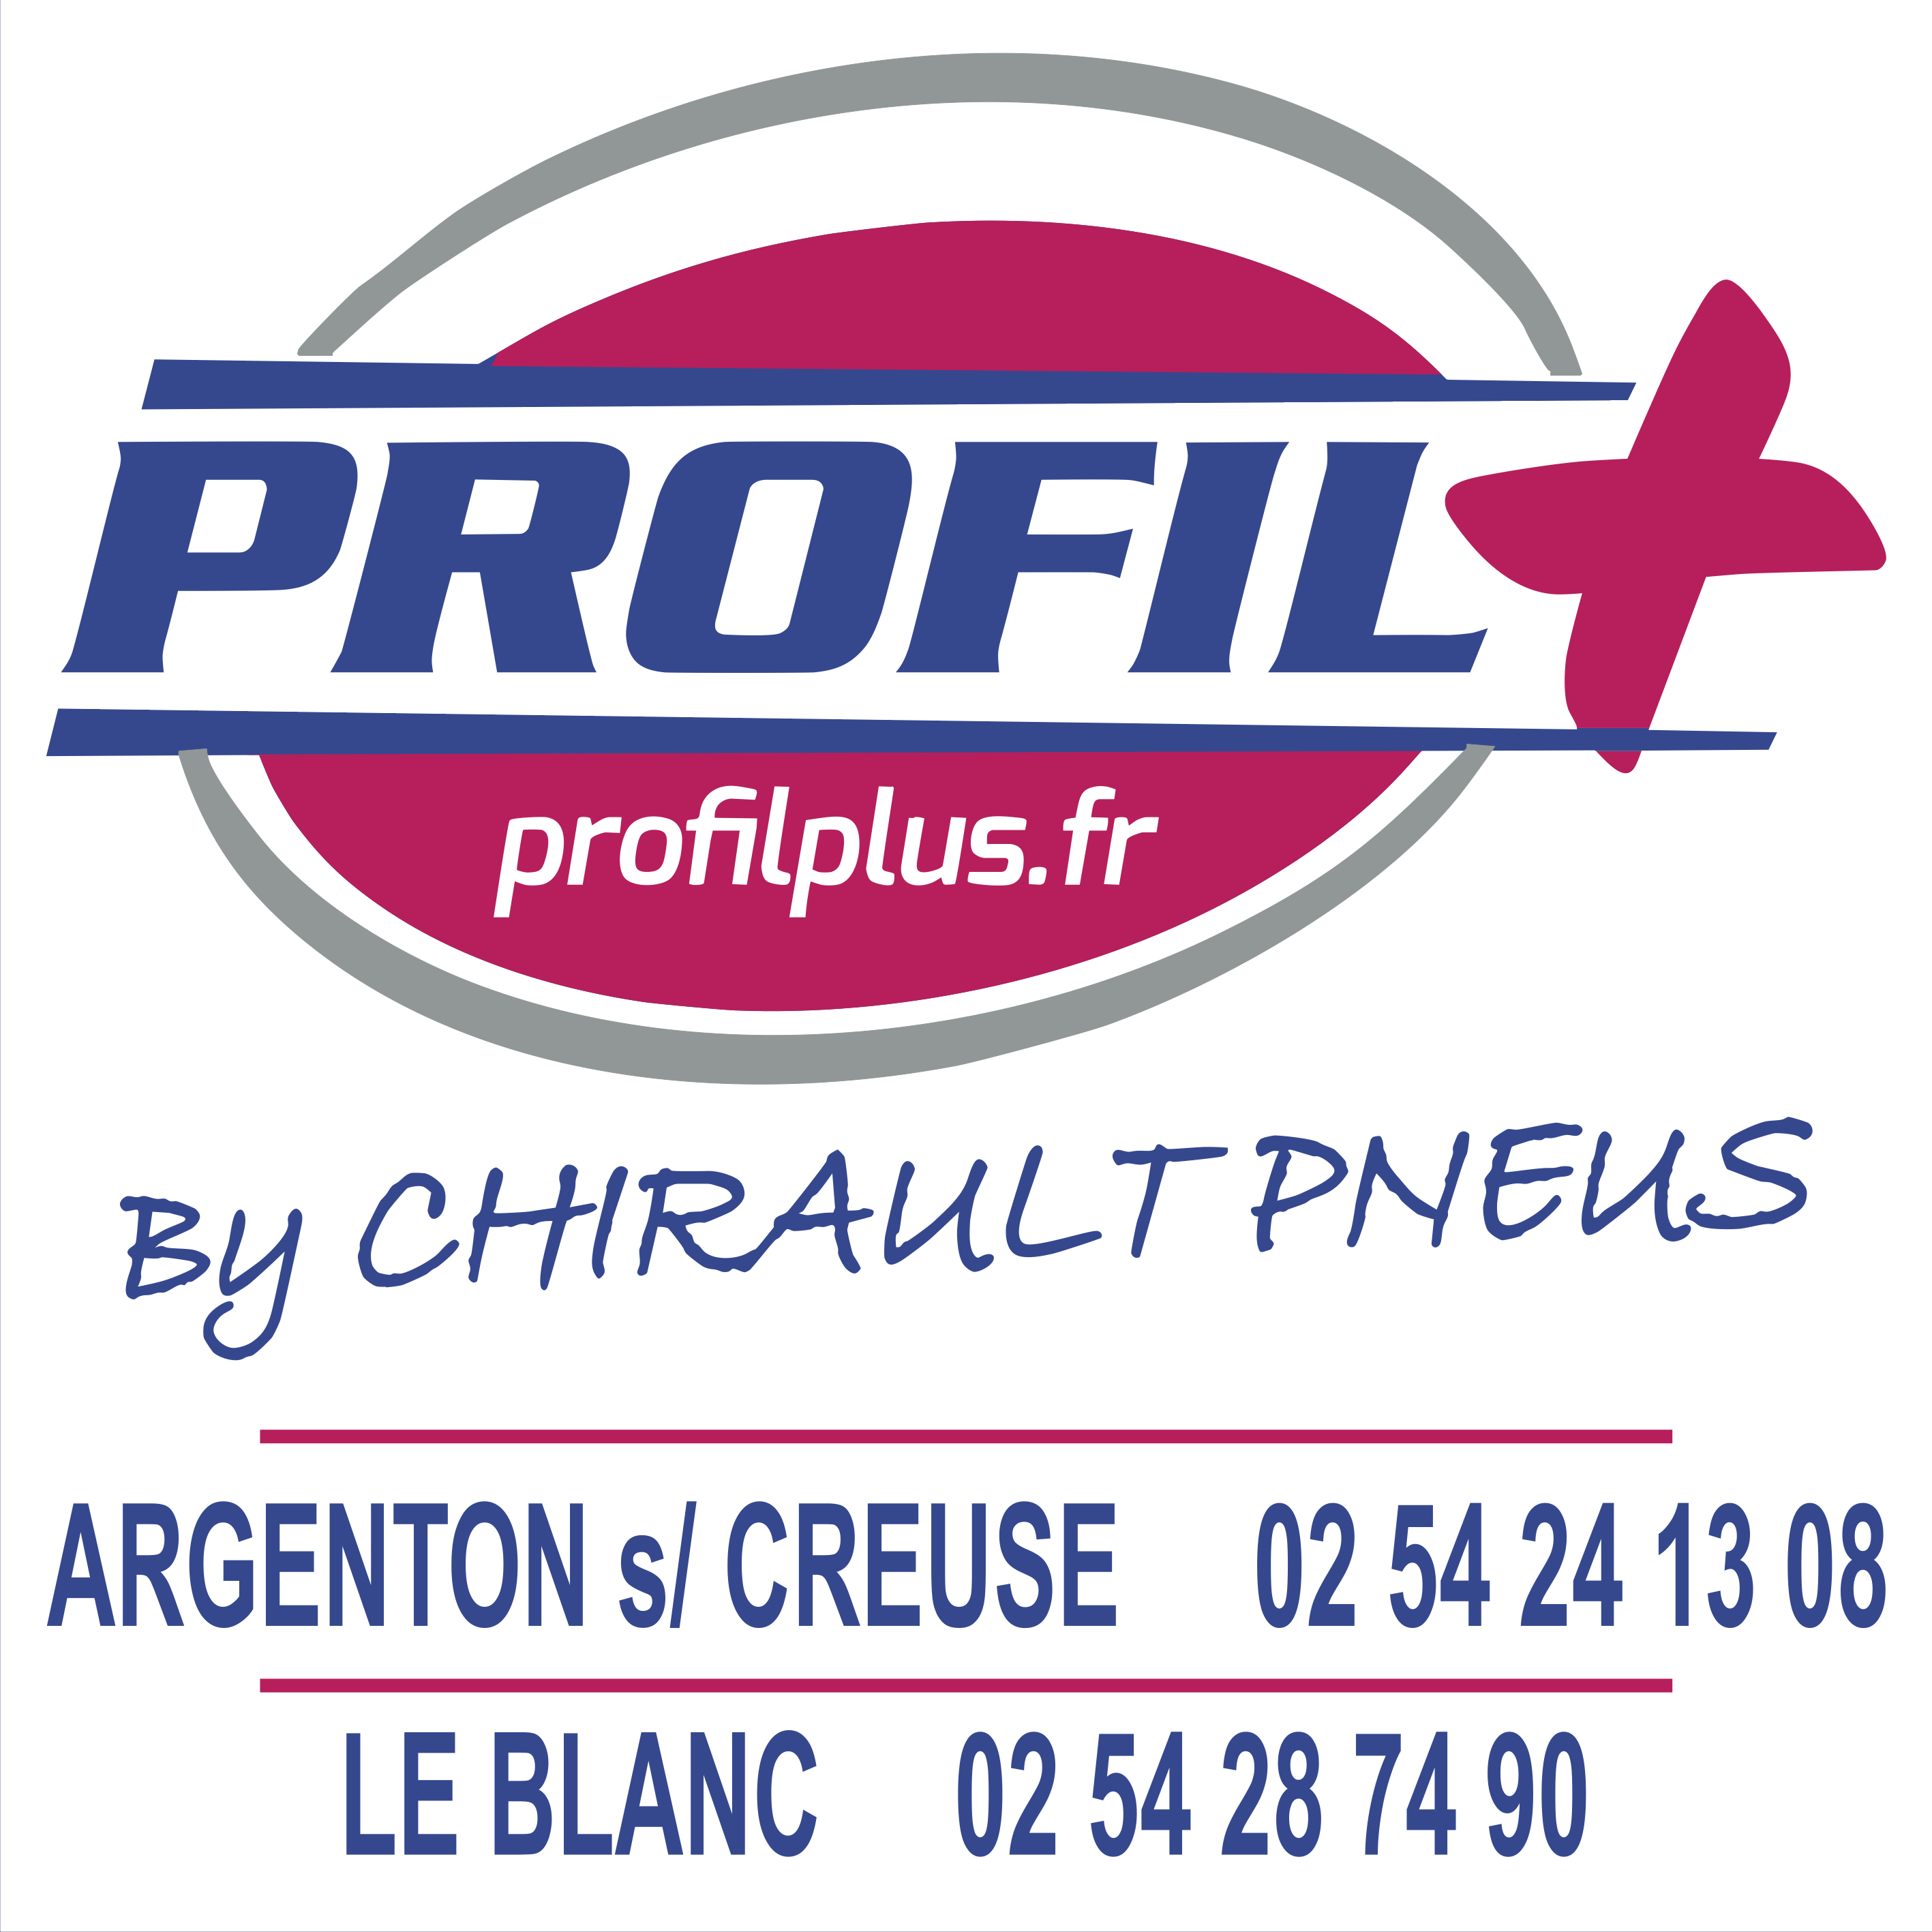 Profil + - Chirault